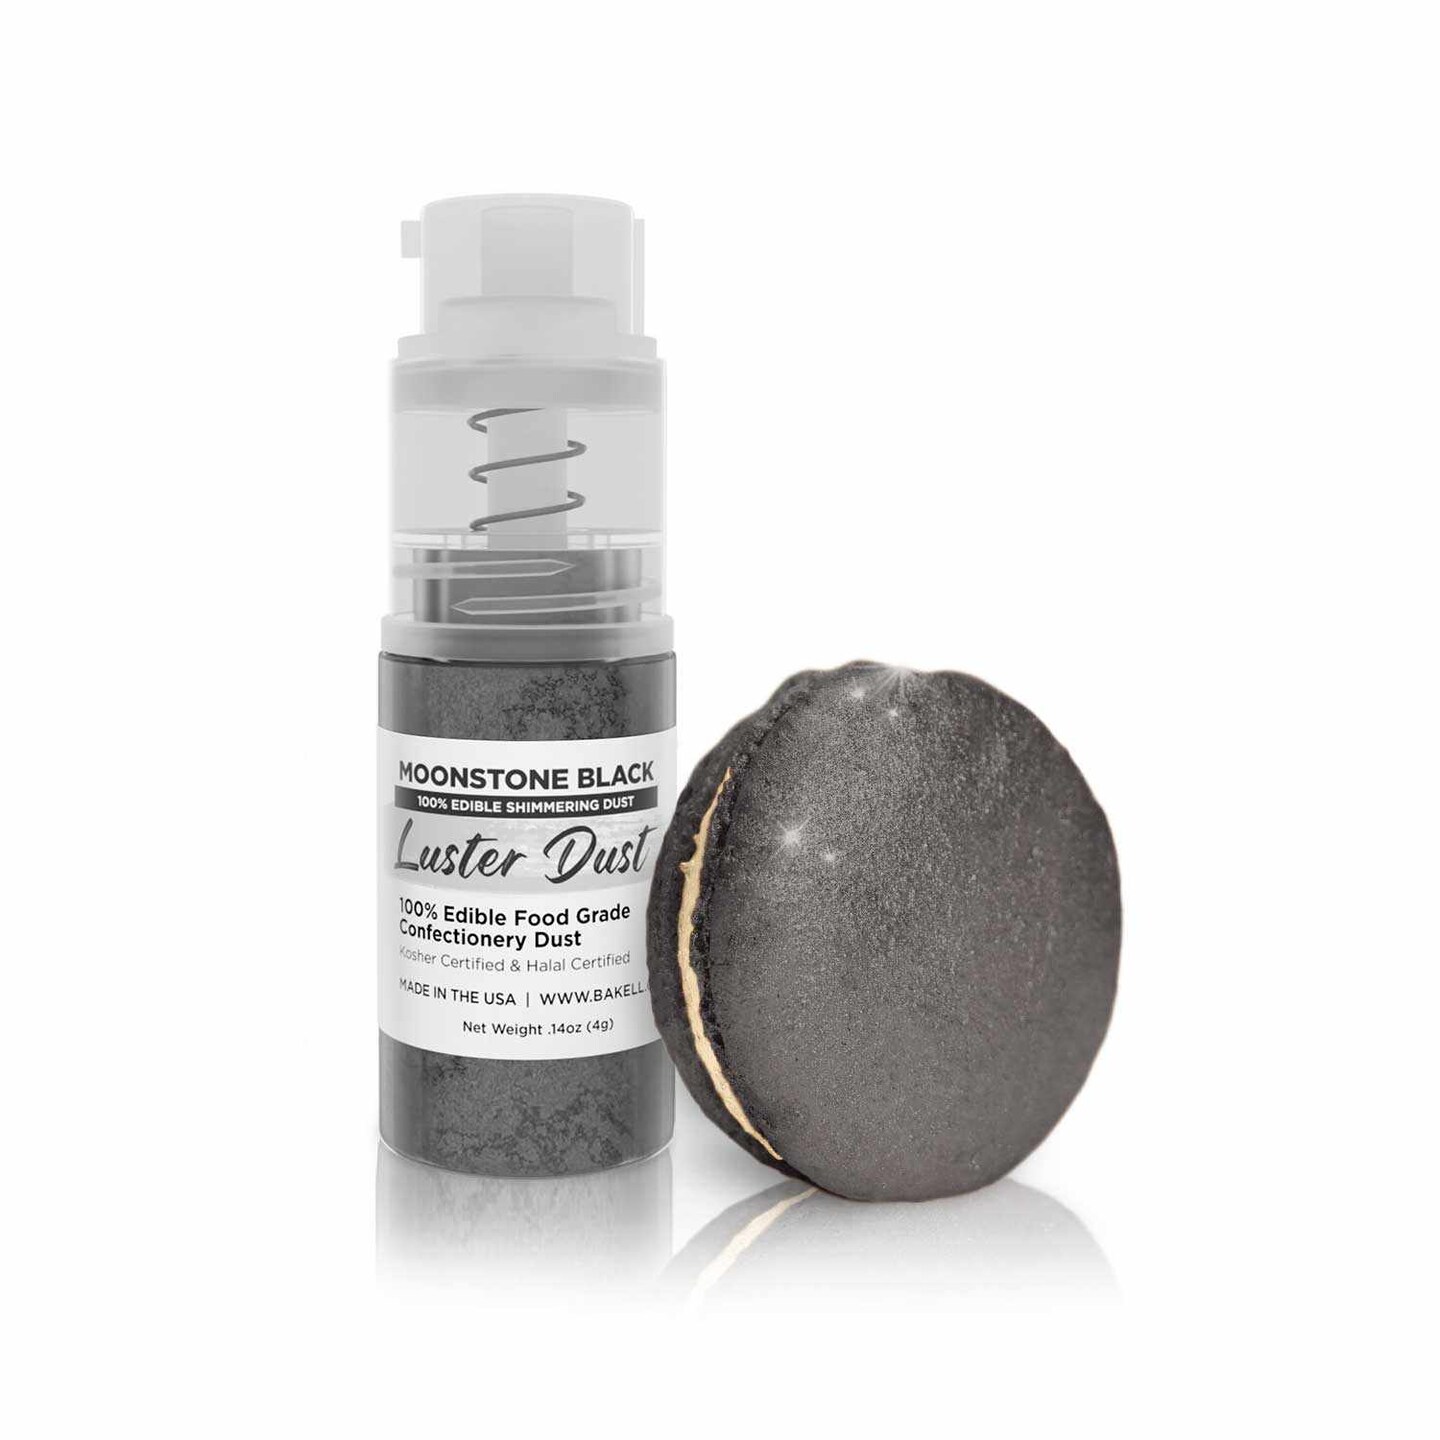 Moonstone Black Luster Dust Spray | Luster Dust Edible Glitter Spray Dust for Cakes, Cookies, Desserts, Paint. FDA Compliant (4 Gram Pump)